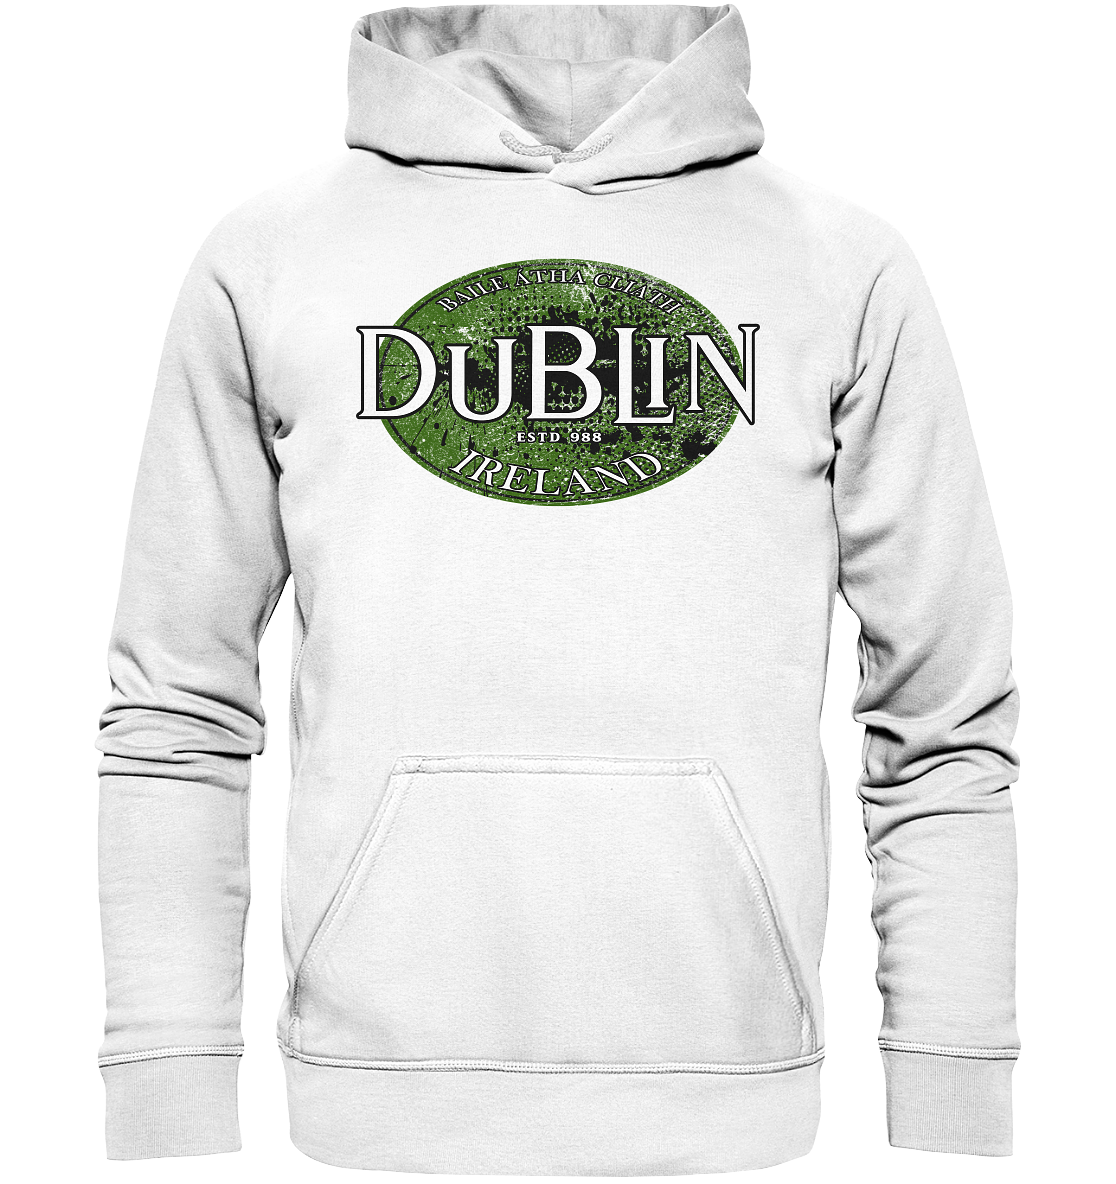 Dublin "Ireland / Baile Átha Cliath / Estd 988" - Basic Unisex Hoodie